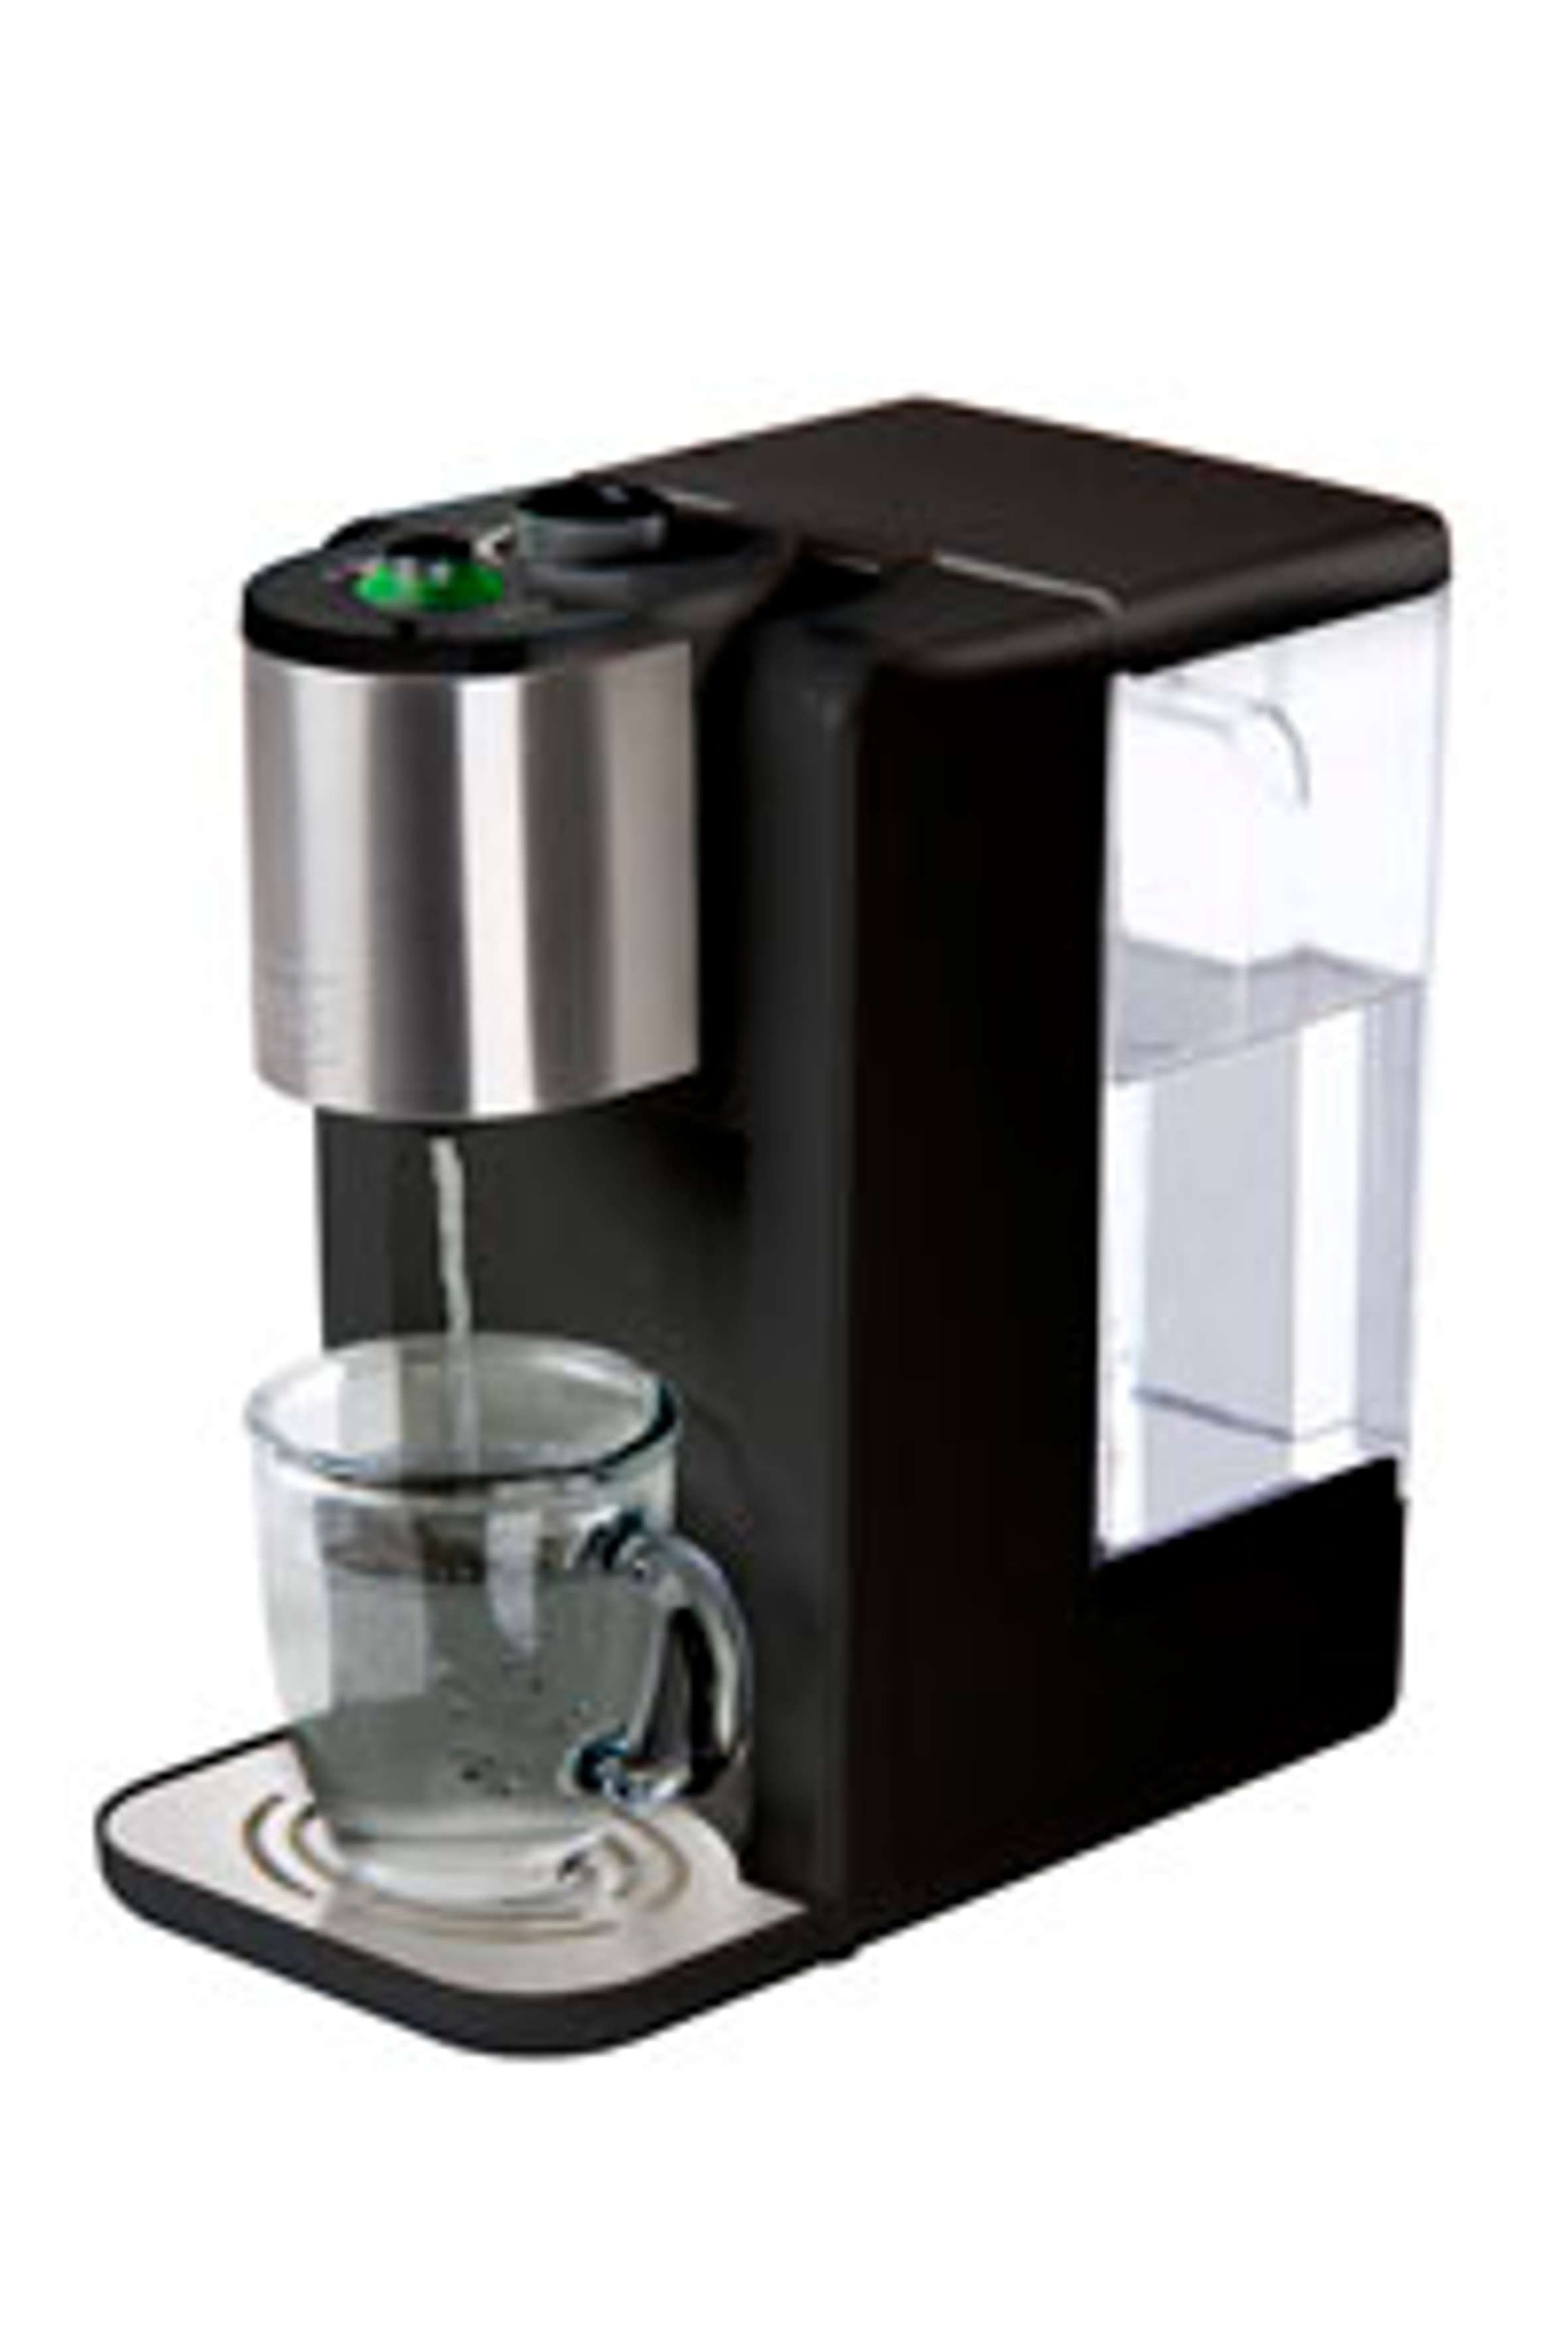 TREBS Wasserkocher 99340, 2.20 l, 2600 W, Heißwasser-Automat, heißes Wasser  in nur 5 Sek.